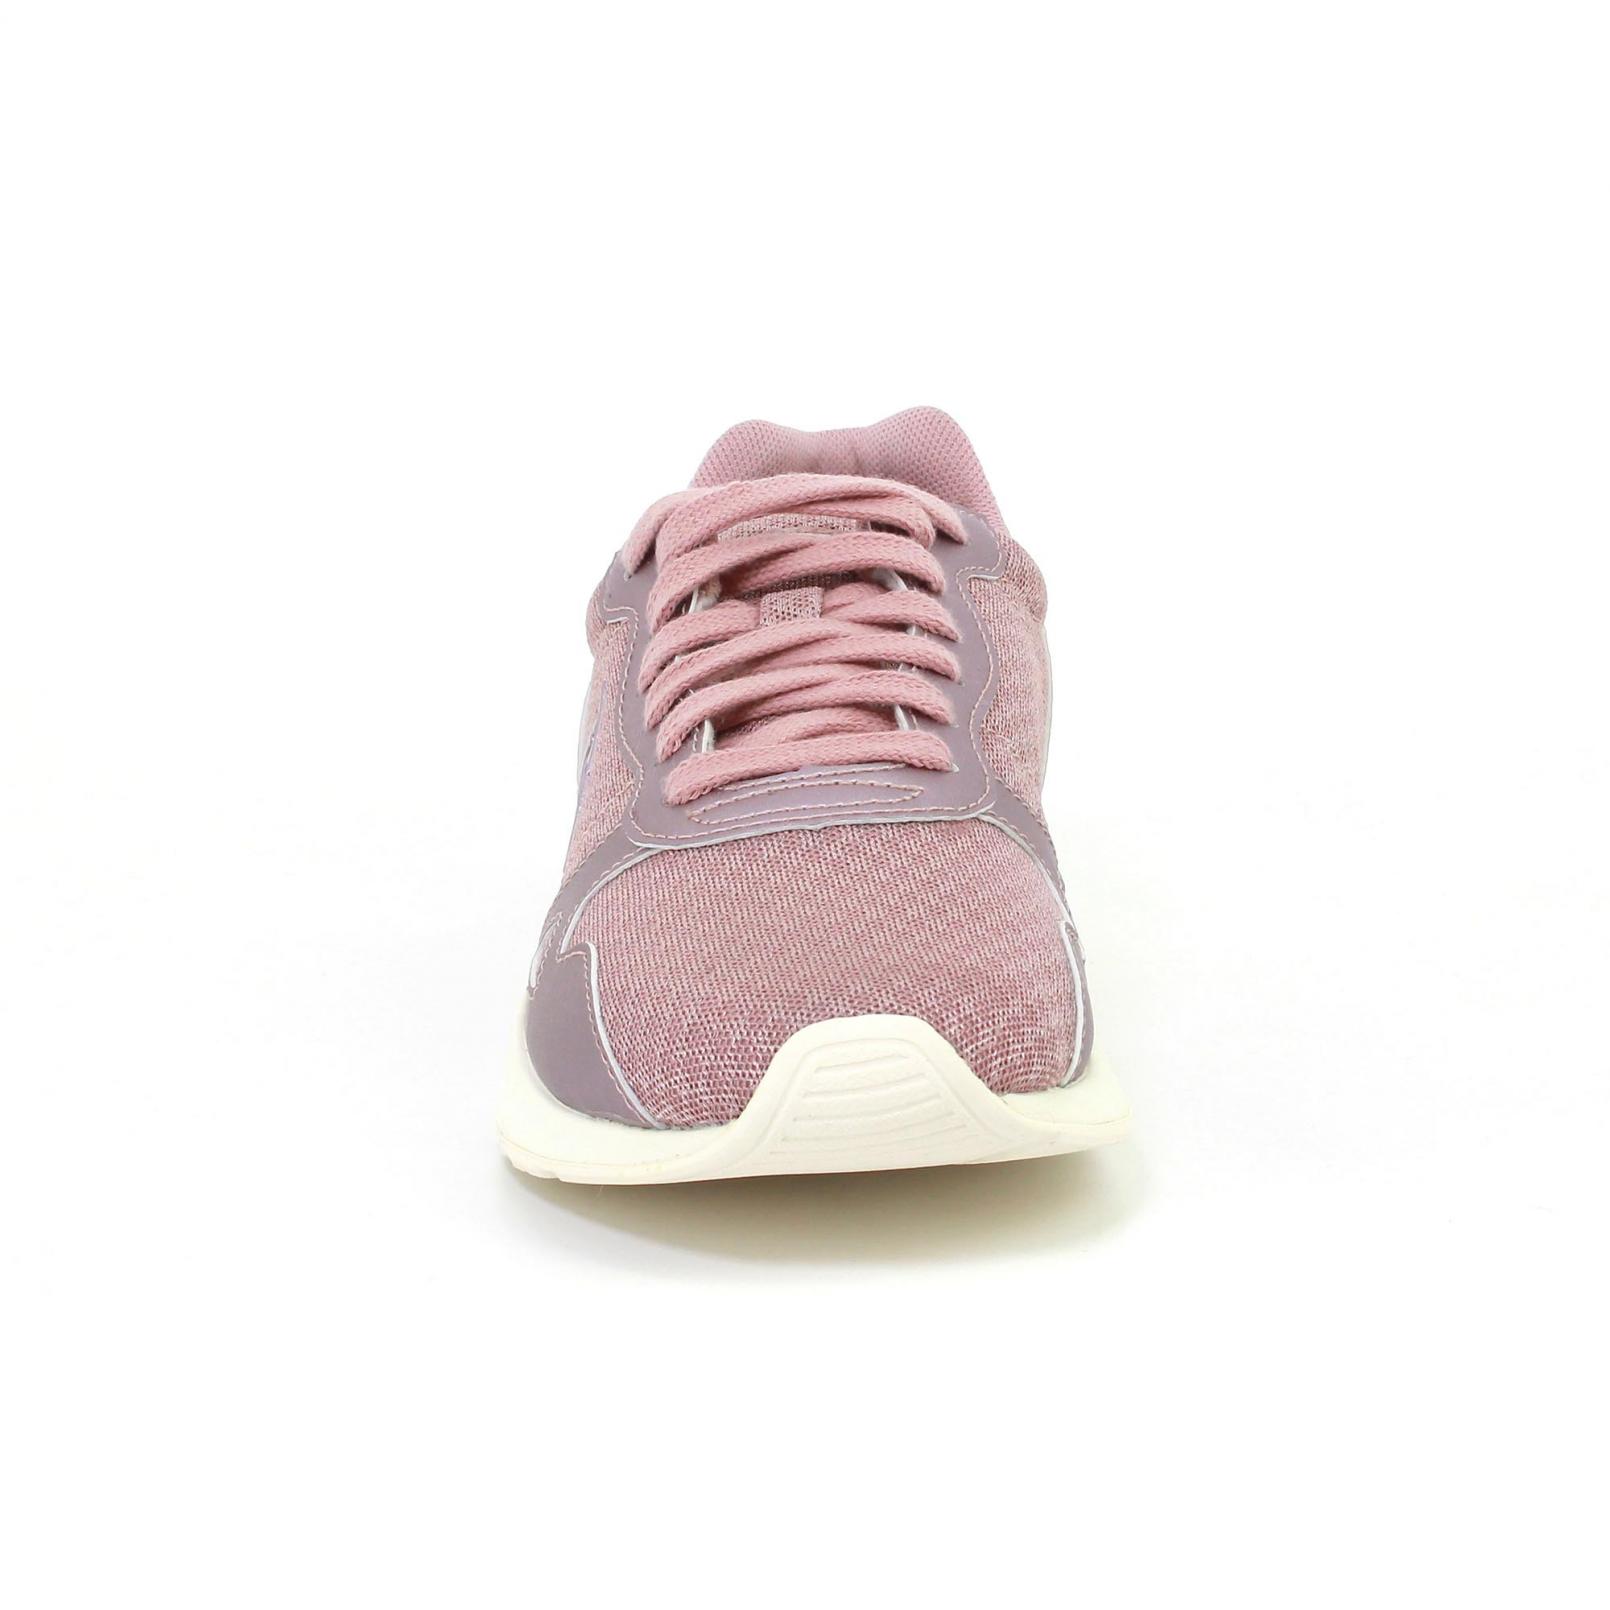 Shoes – Le Coq Sportif Lcs R600 Gs Feminine Mesh/Metallic Pink/Pink